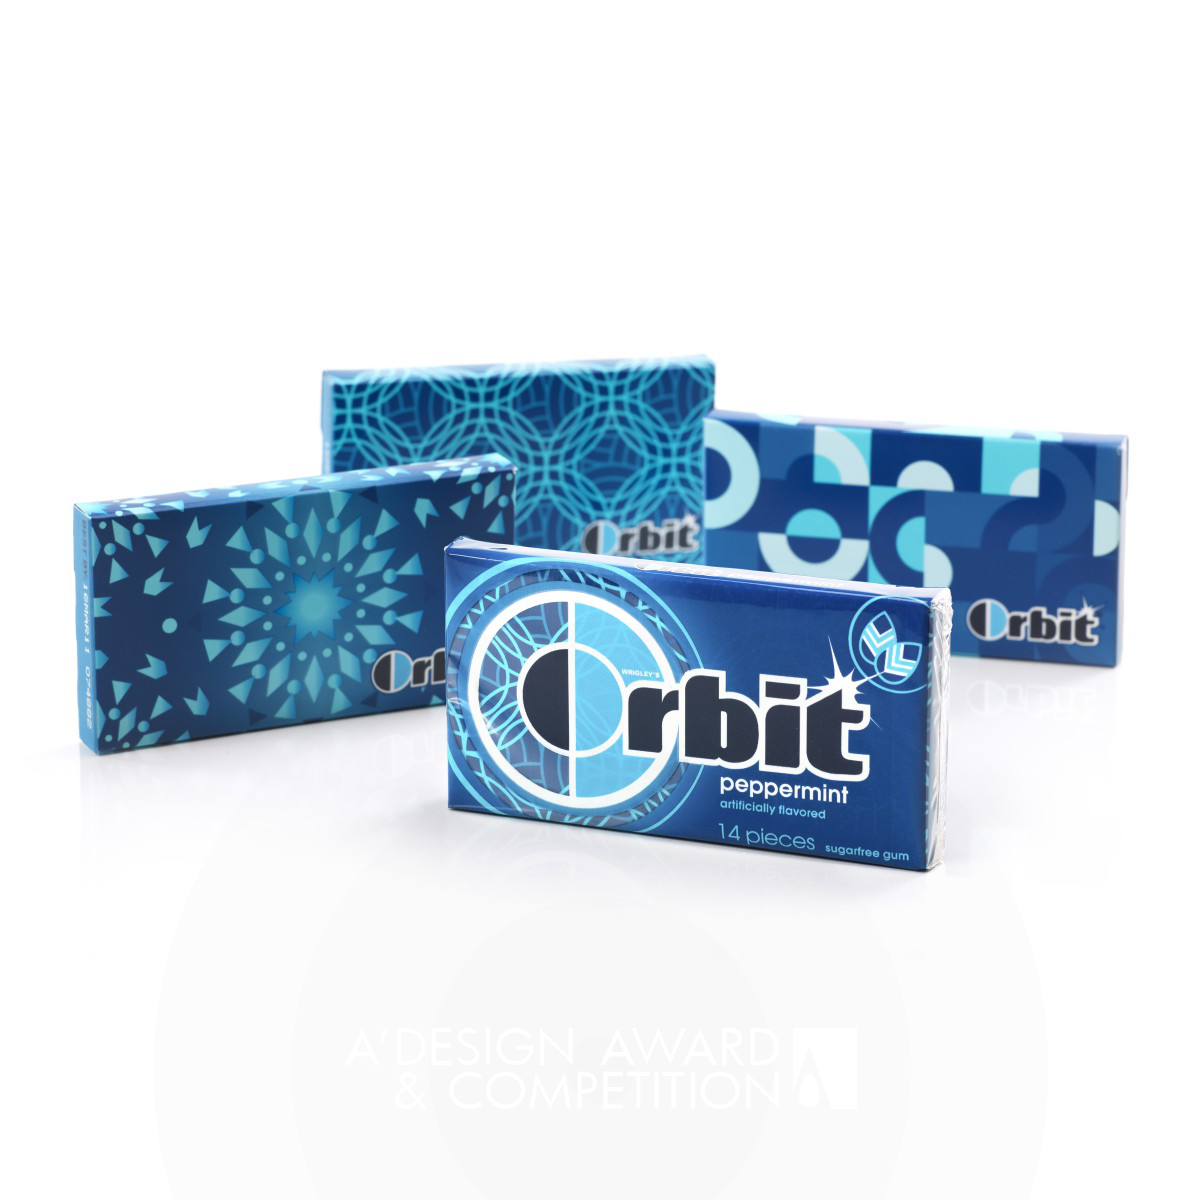 Wrigley Orbit Chewing Gum Package by Scott Lucas